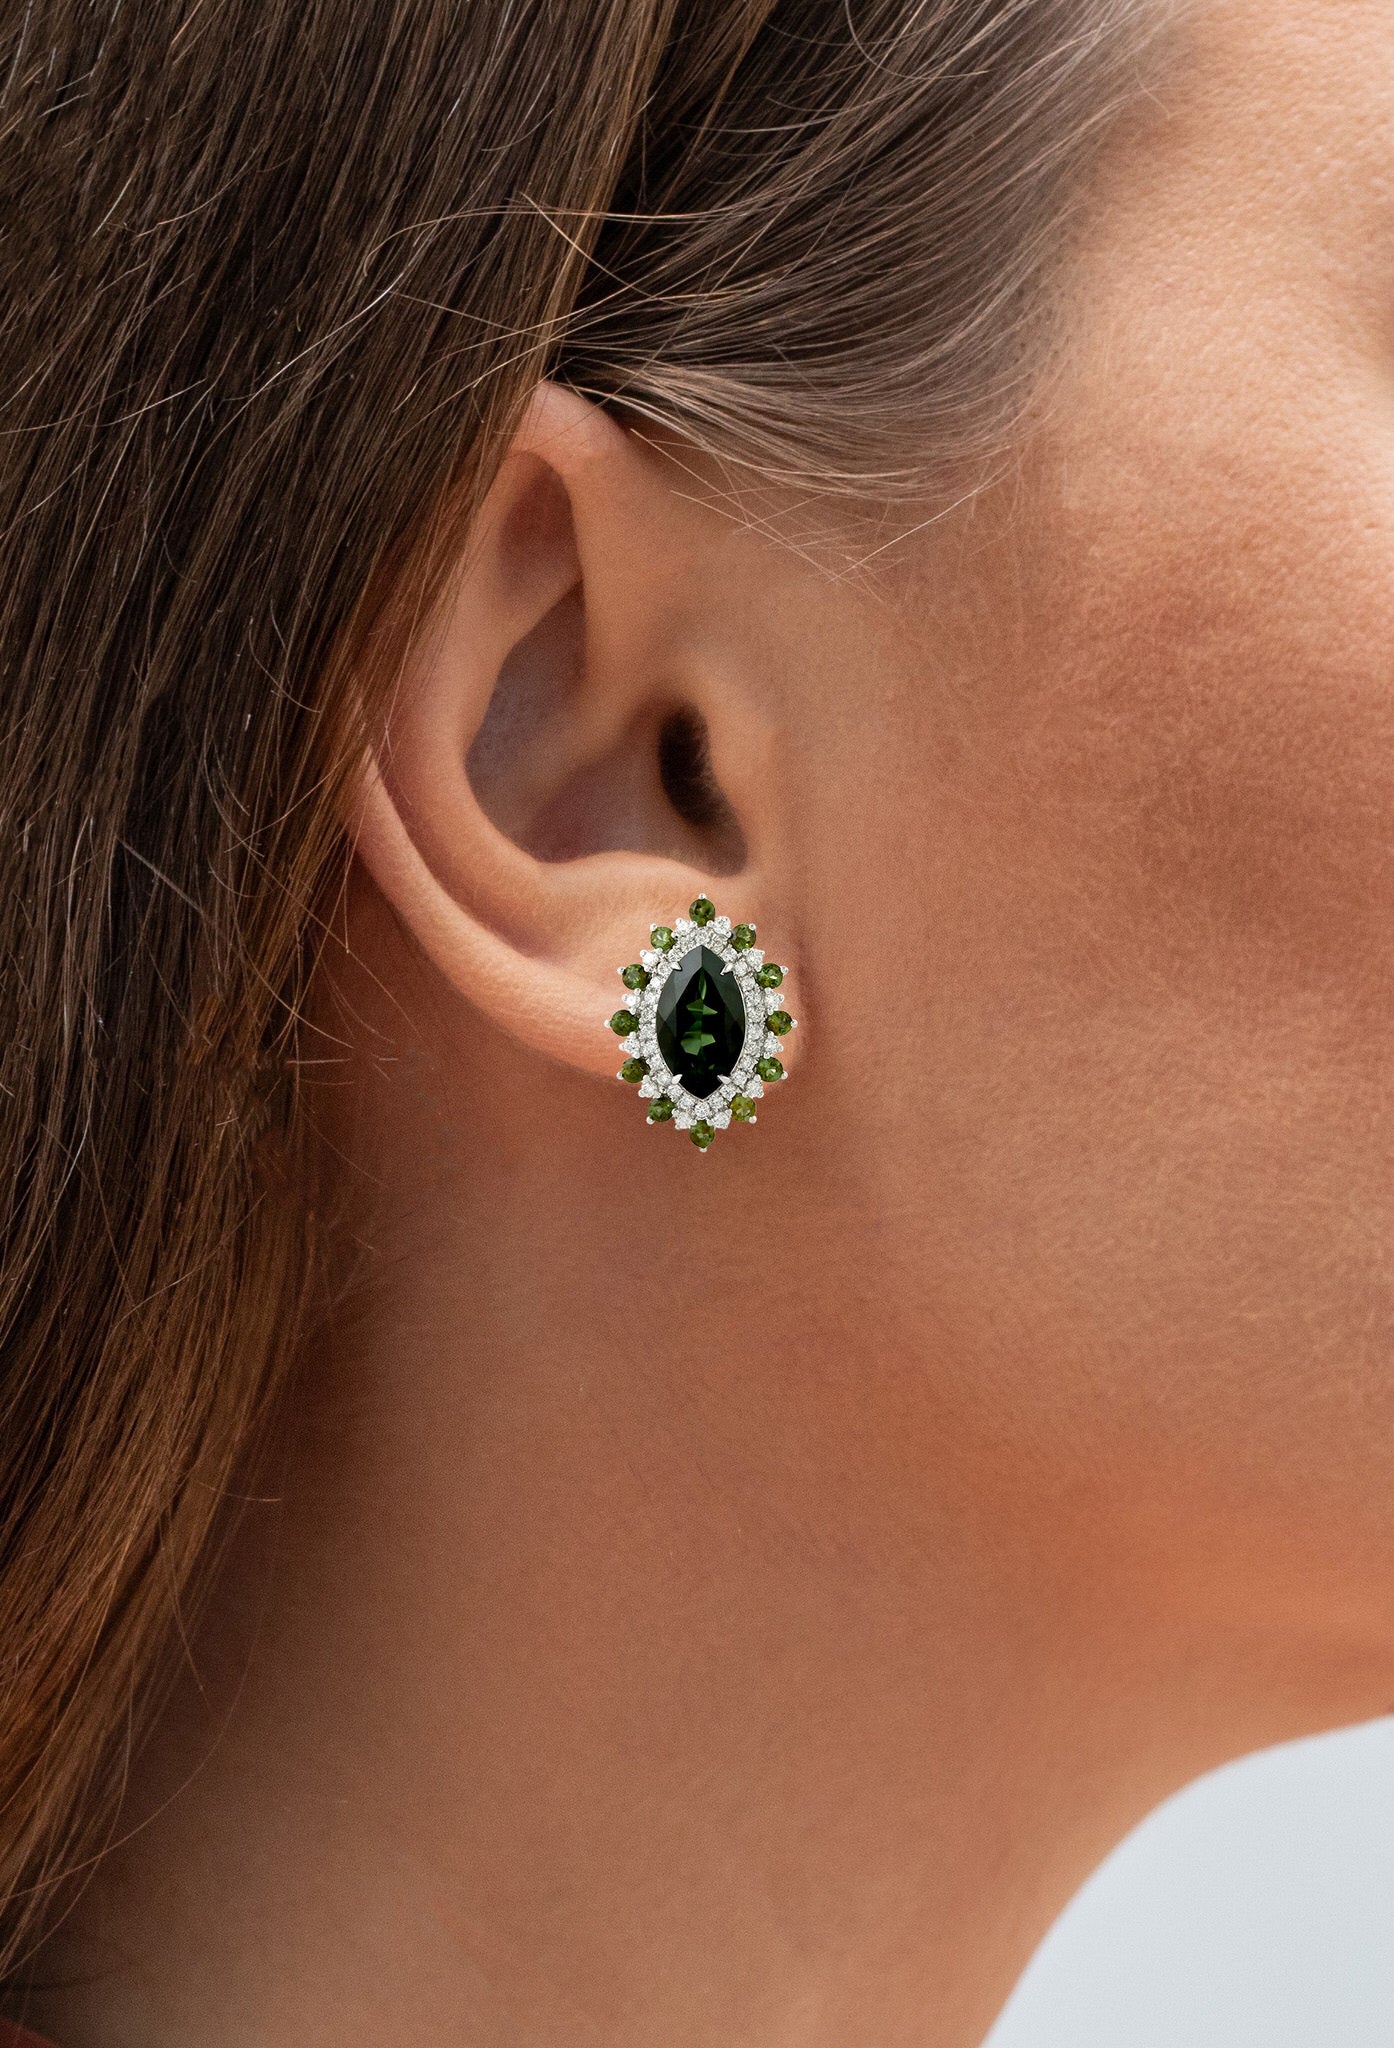 Stunning Natural Green Tourmalines And Diamonds Earrings 18K Gold 6.68 Carats